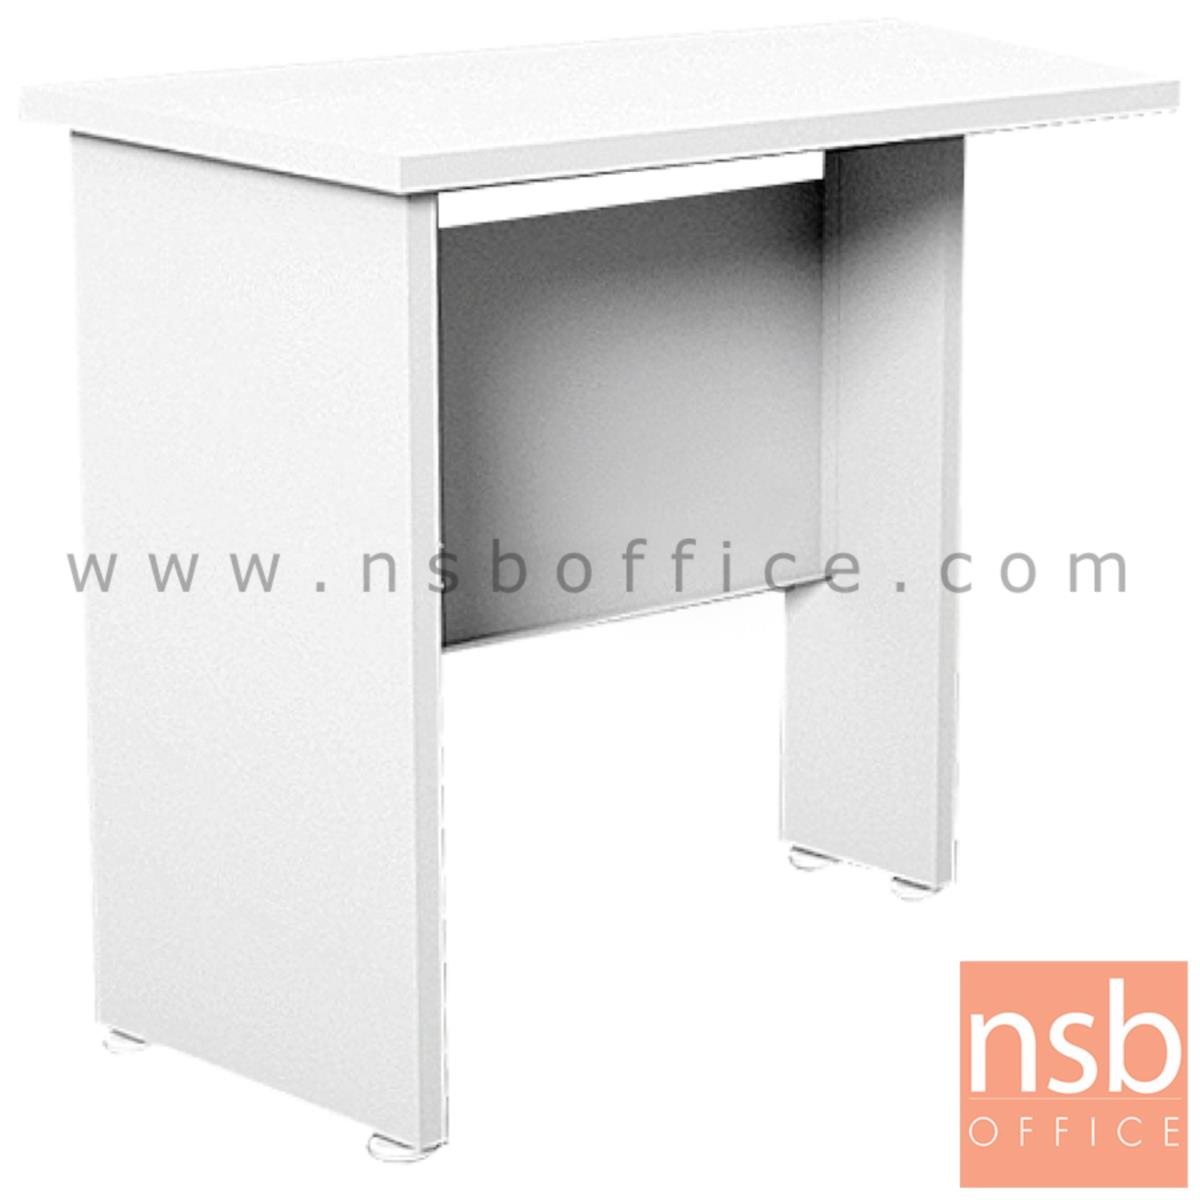 A20A031:โต๊ะเข้ามุม  รุ่น Nightlight (ไนท์ไลท์) ขนาด 80W cm. สีขาวล้วน